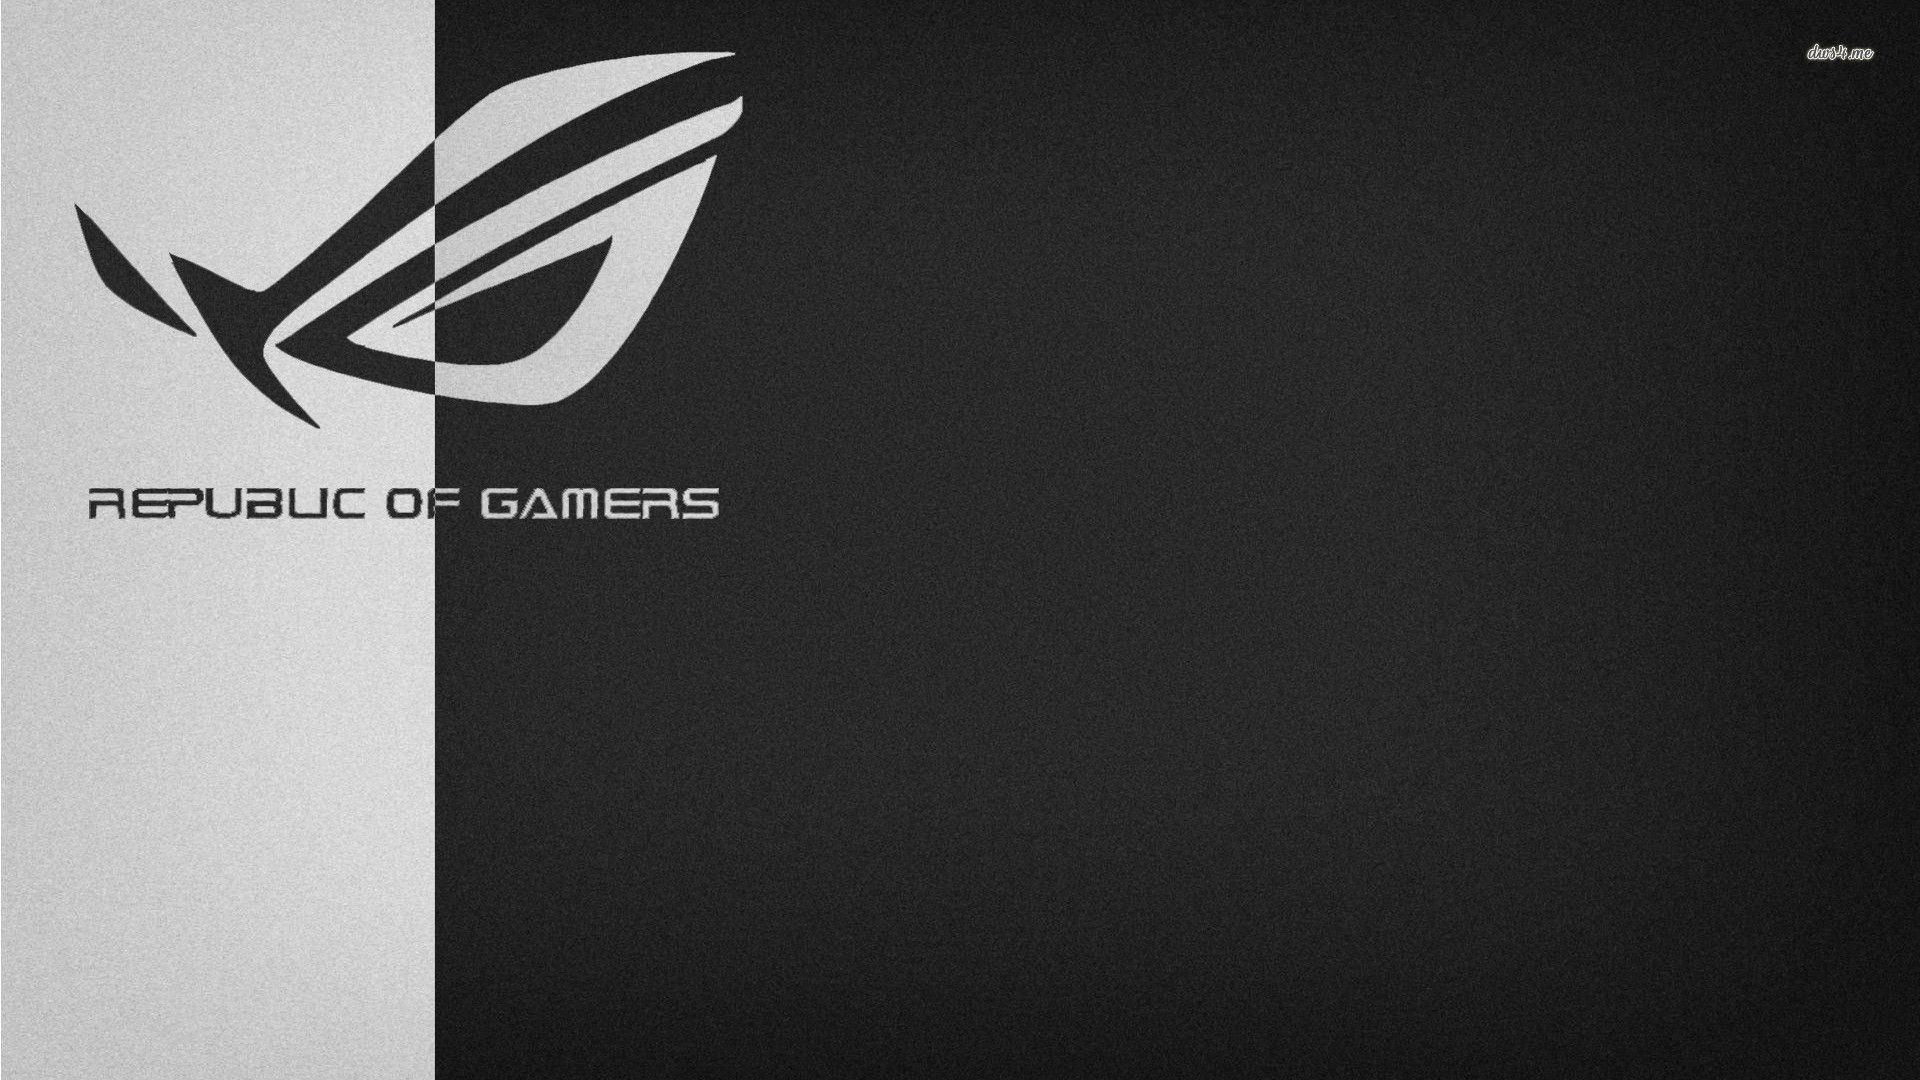 Gamer 4k Ultra HD Wallpapers - Wallpaper Cave